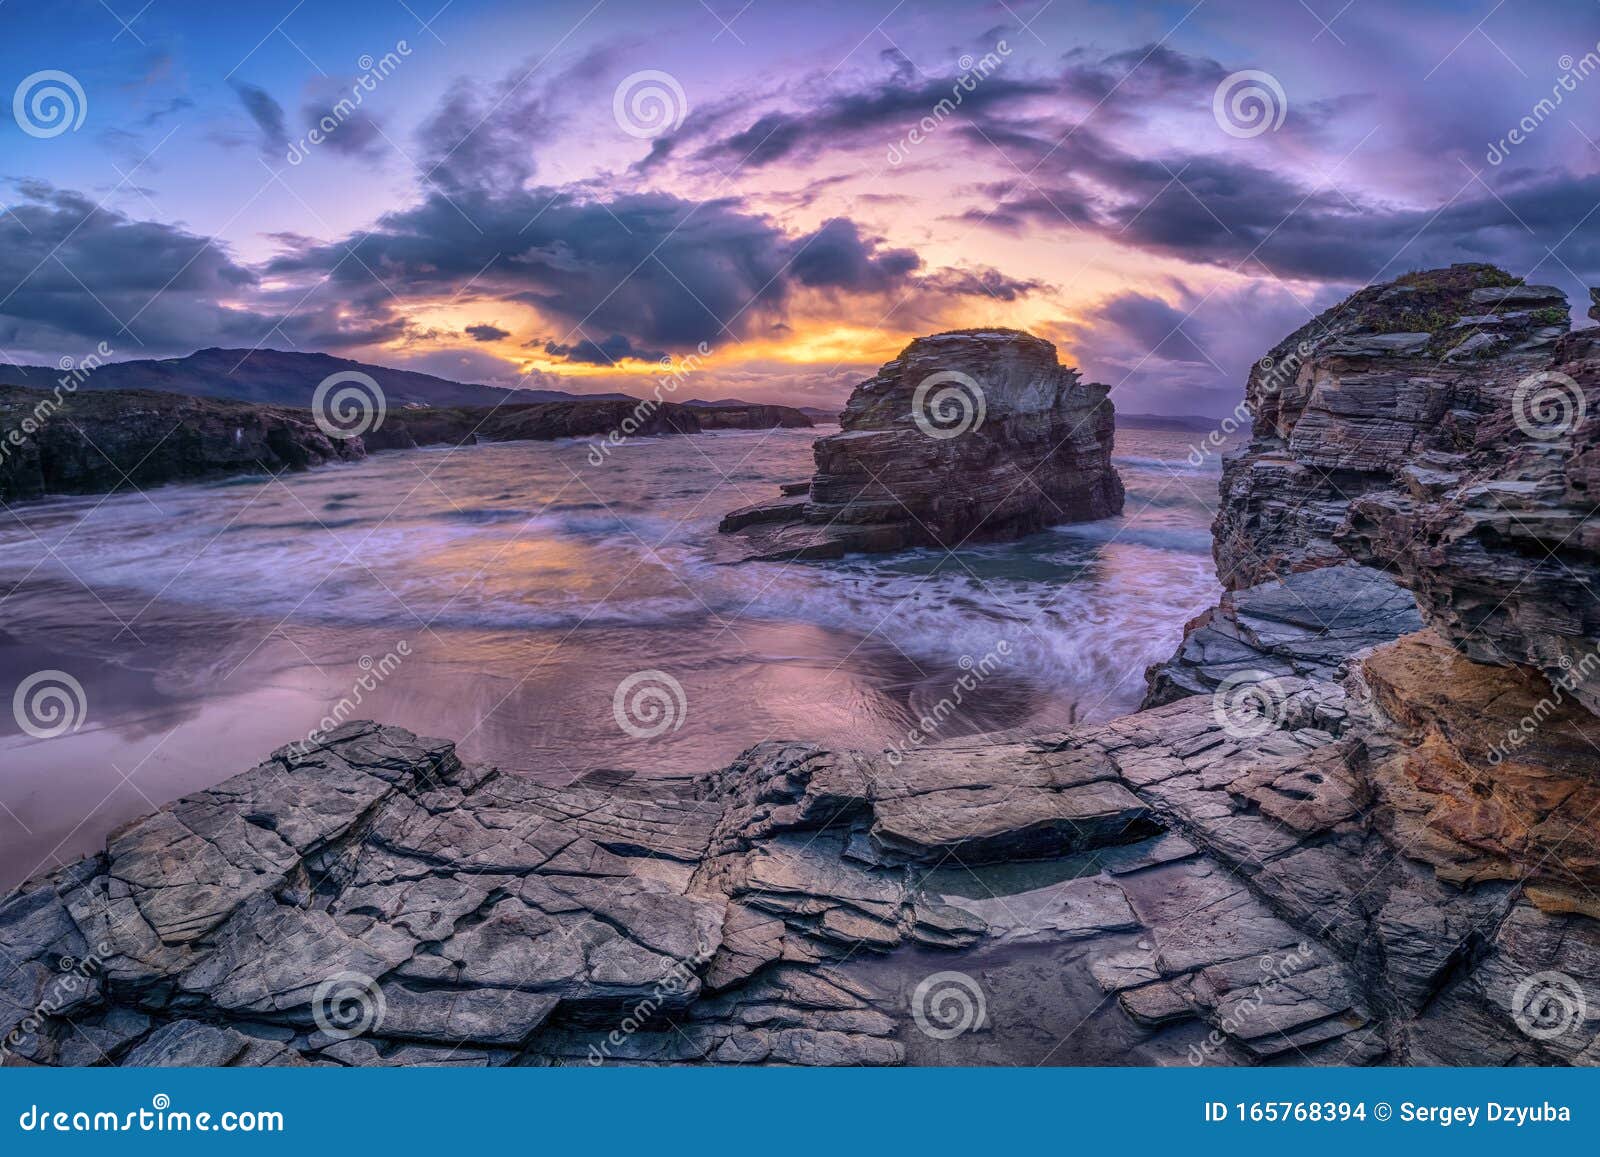 picturesque rocks and cliffs on praia das illas, spain